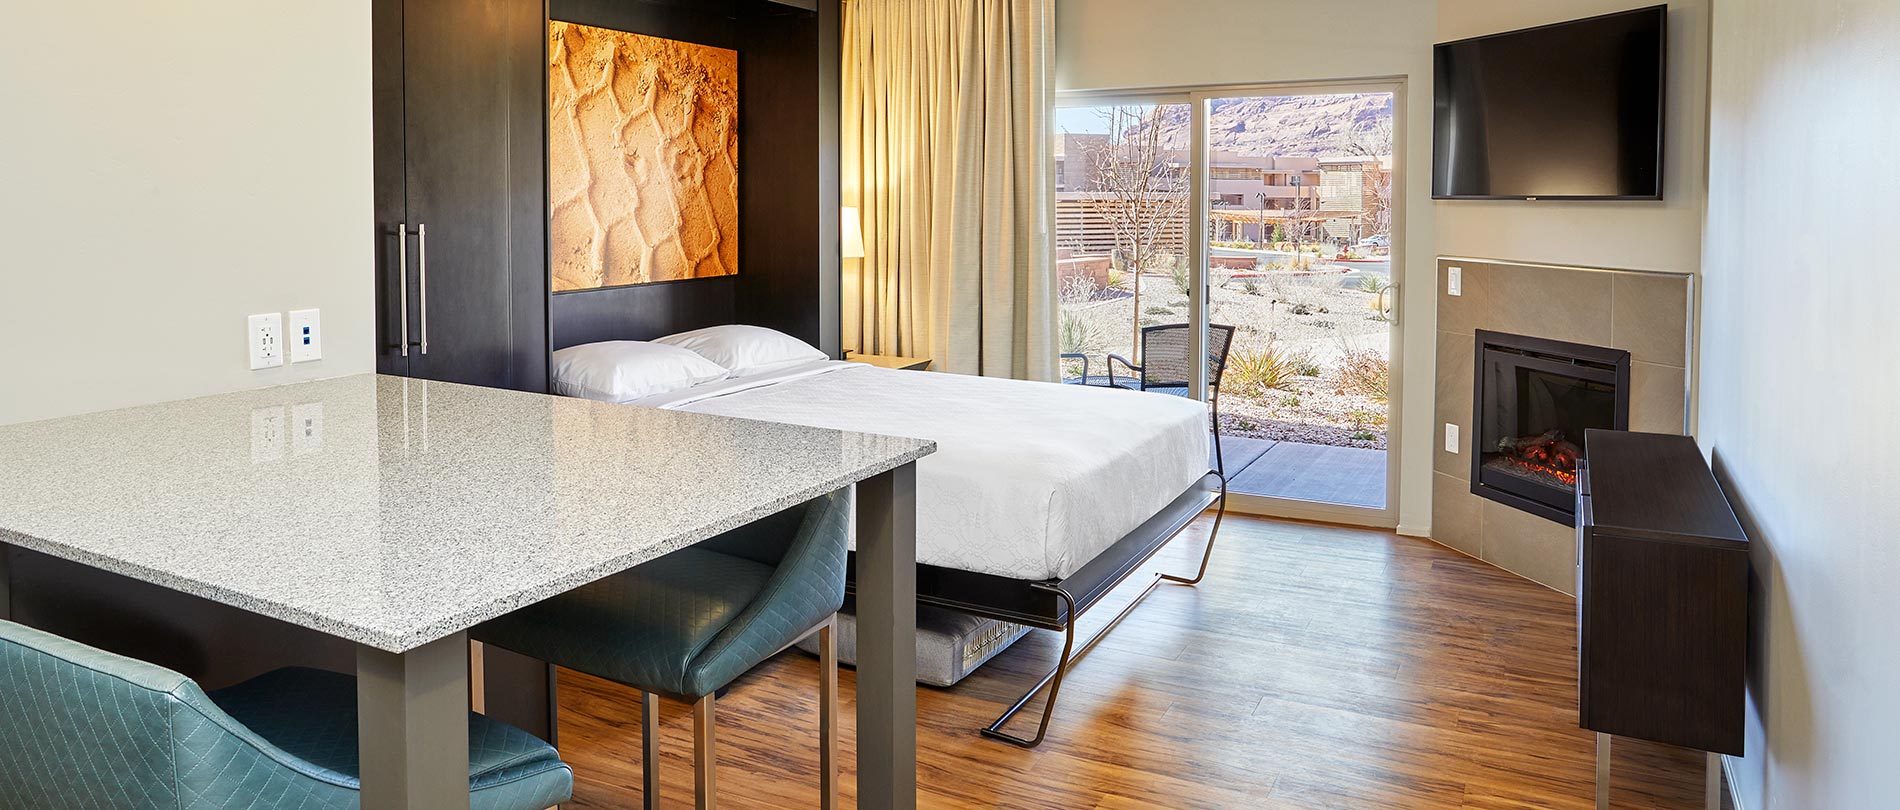 Bedroom - Dining - Worldmark Moab